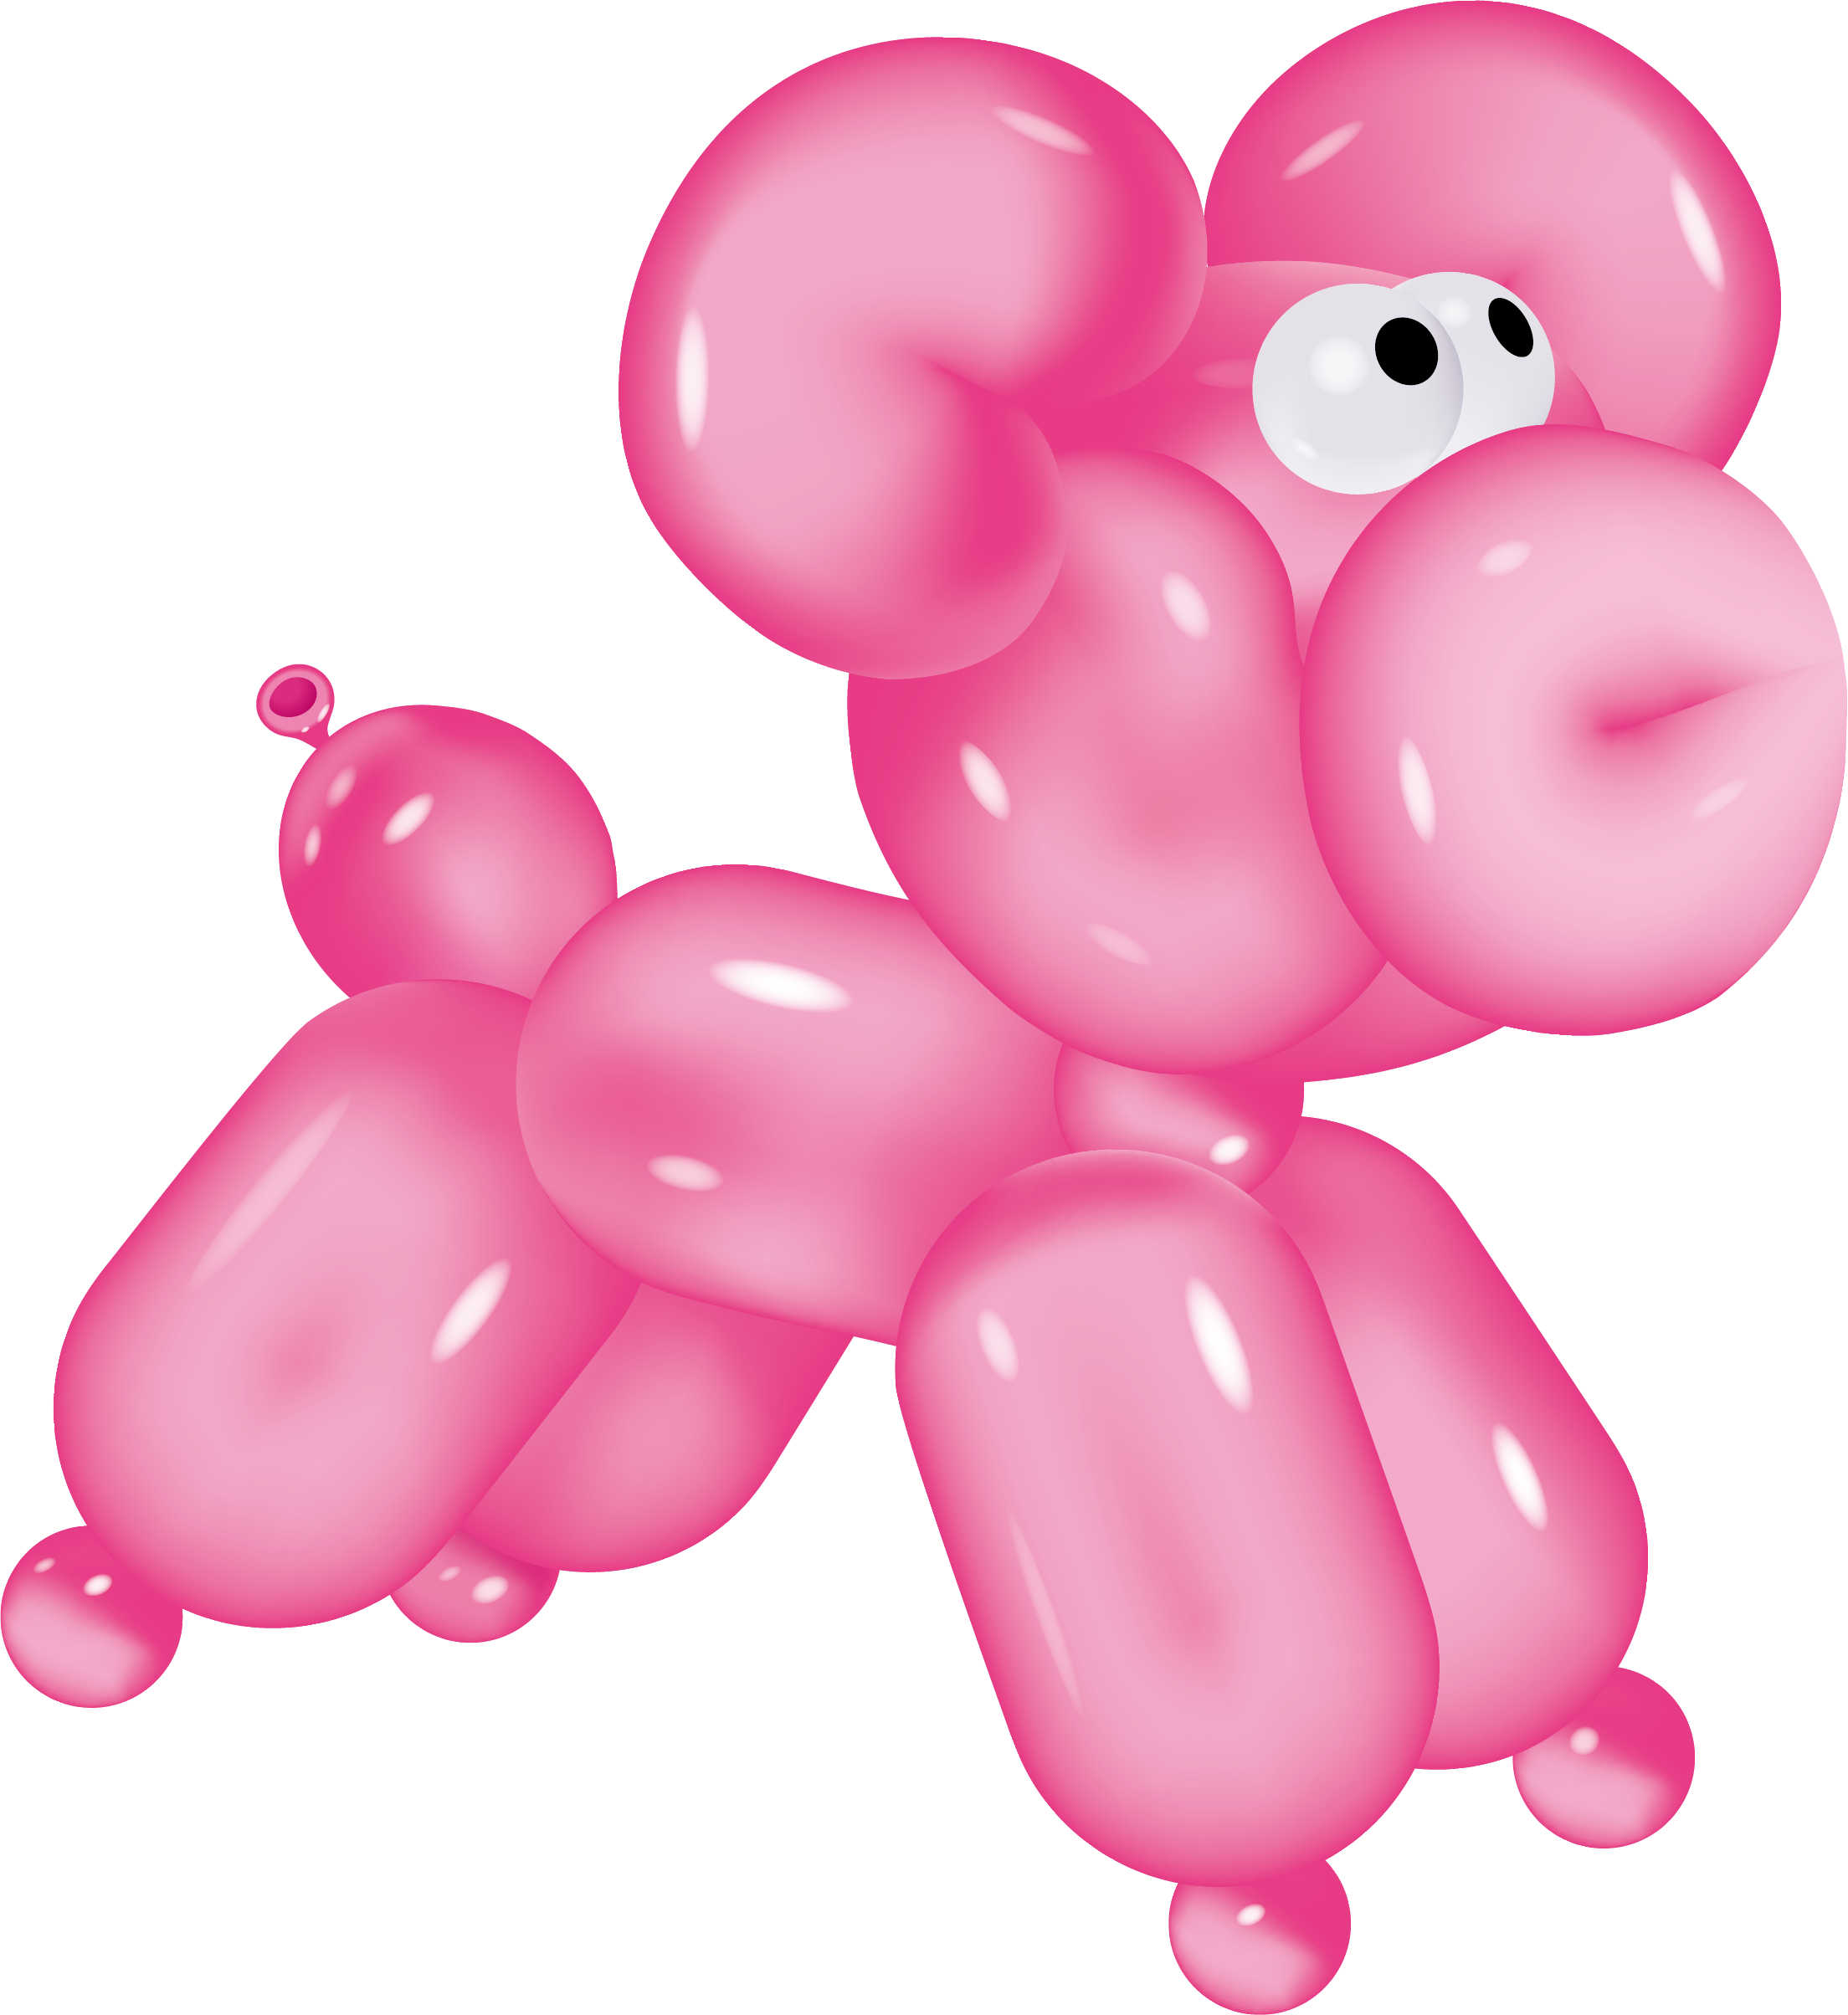 Balloon Dog Balloon Modelling Clip Art - Balloon Dog Balloon Modelling Clip Art (2208x2408)